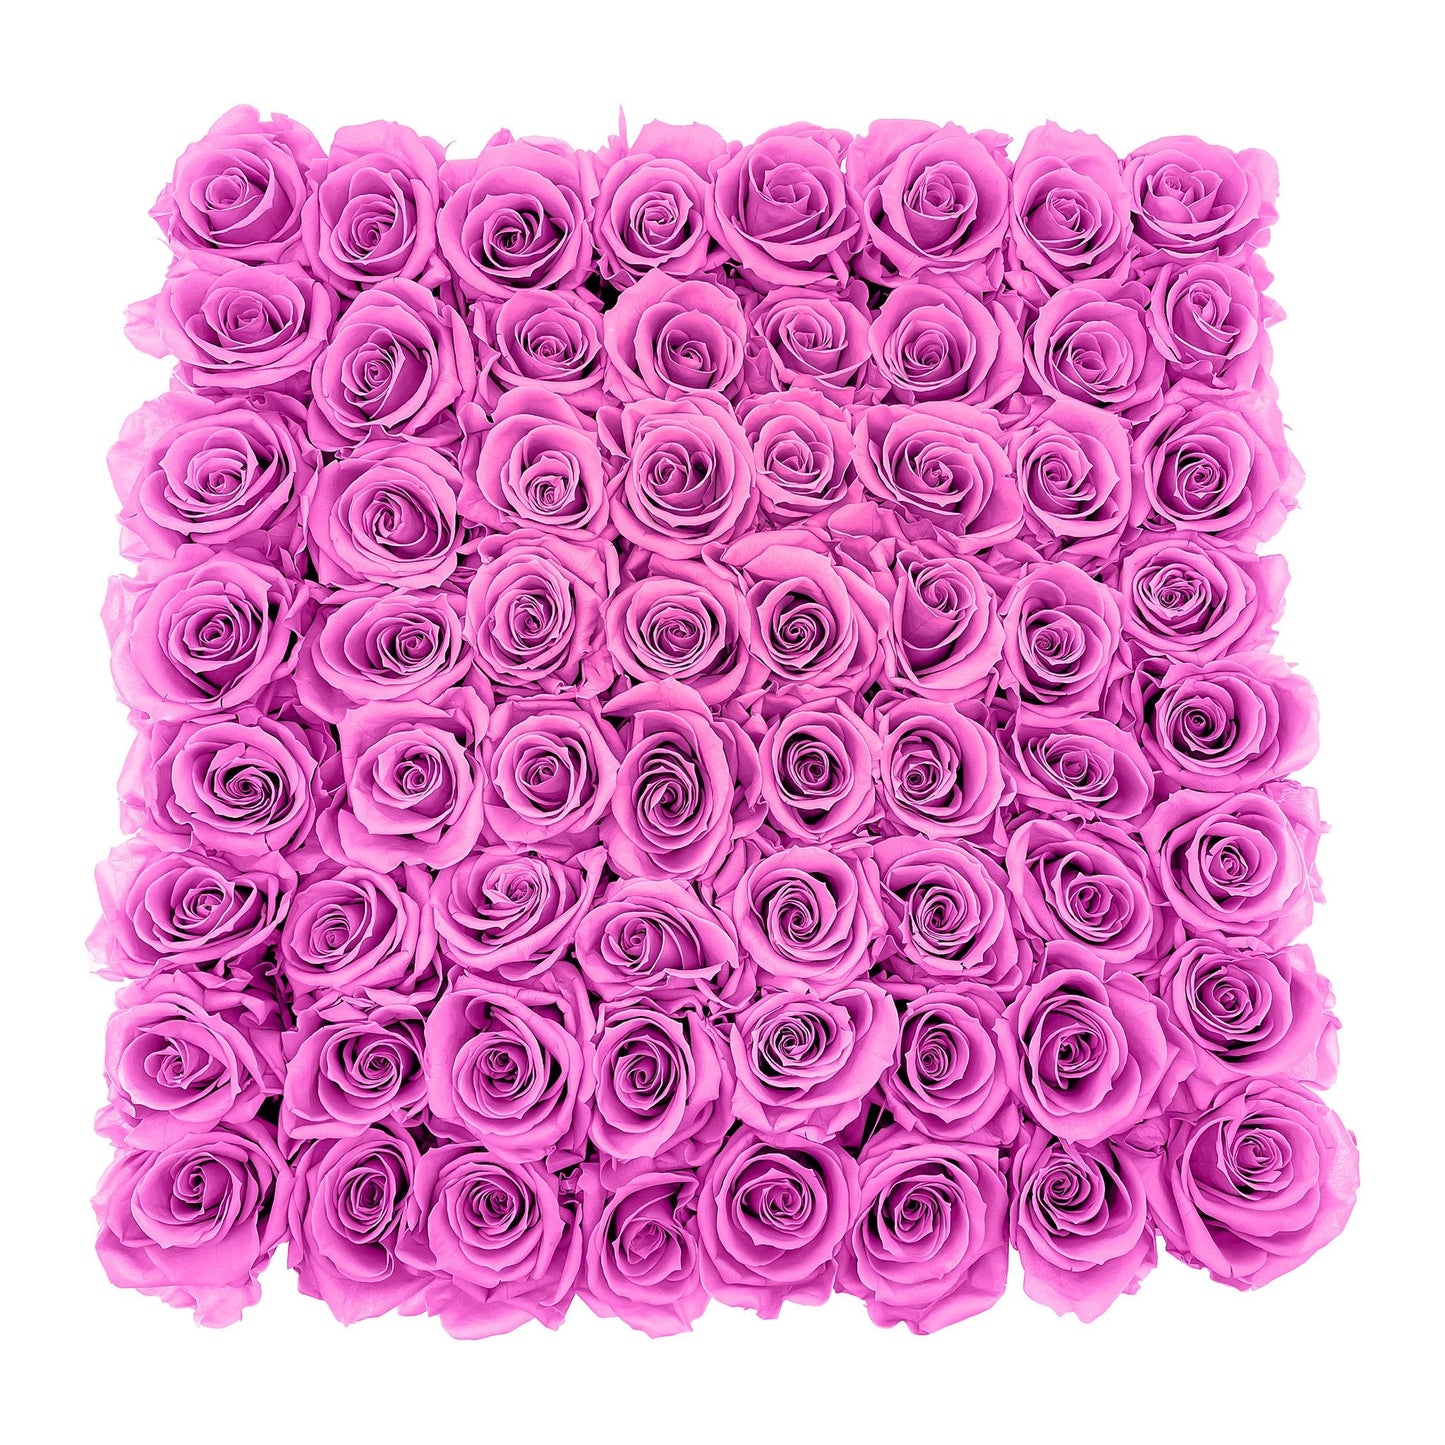 Preserved Roses Large Box | Hot Pink - Floral Arrangement - Flower Delivery Brooklyn